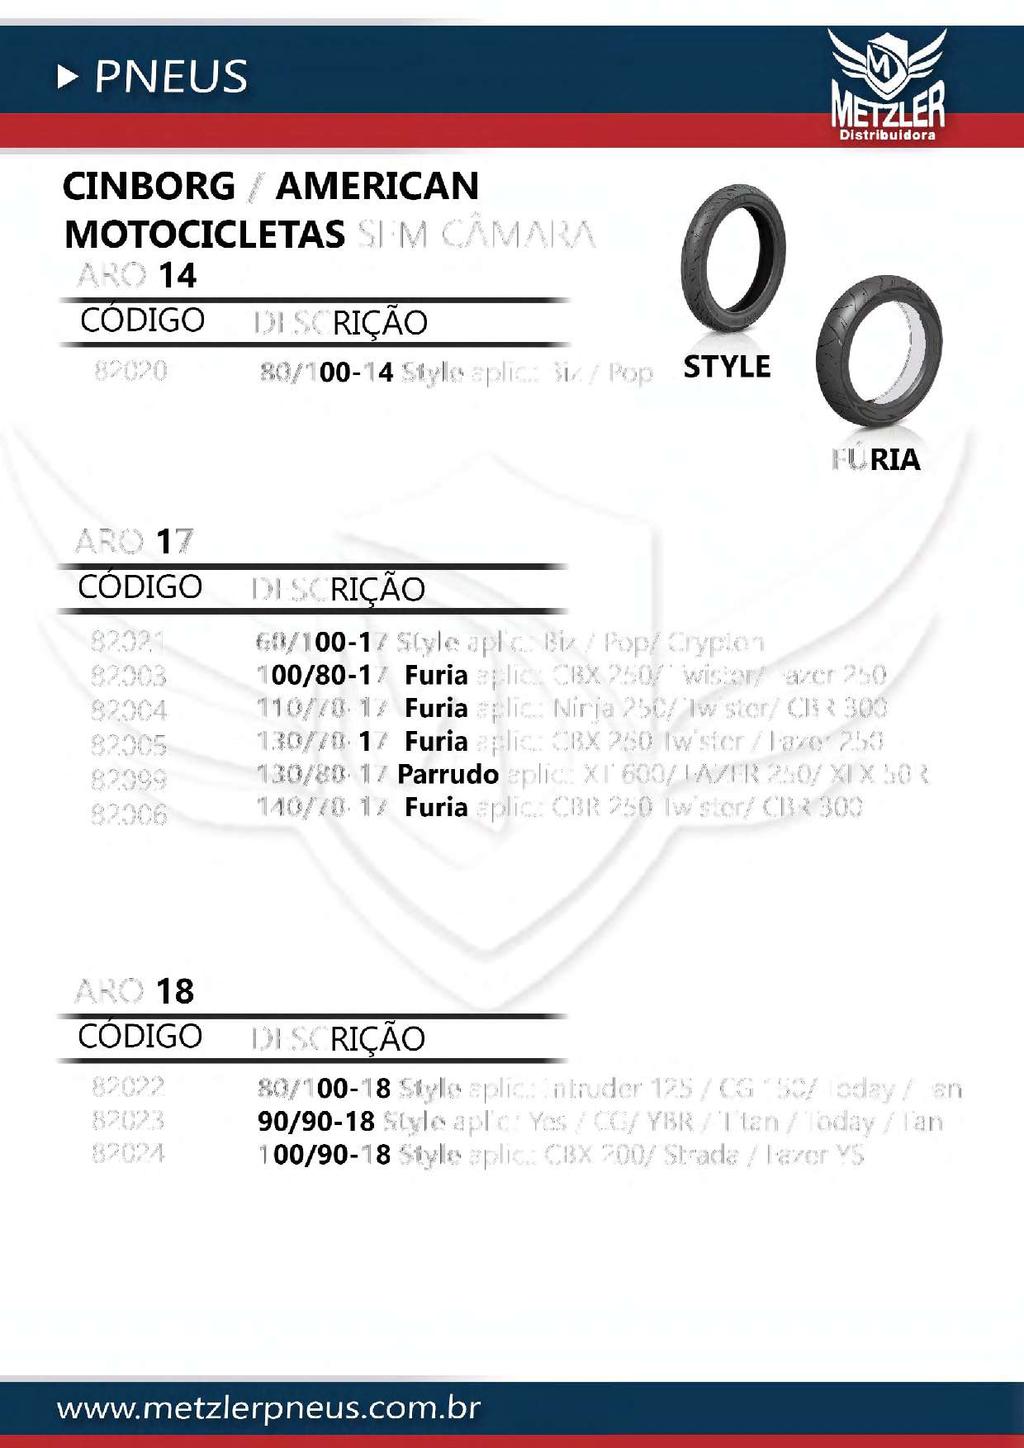 CINBORG / AMERICAN A MOTOCICLETAS SEM CAMARA ARO 14 82020 ""' DESCRIÇAO 80/100-14 Style aplic.